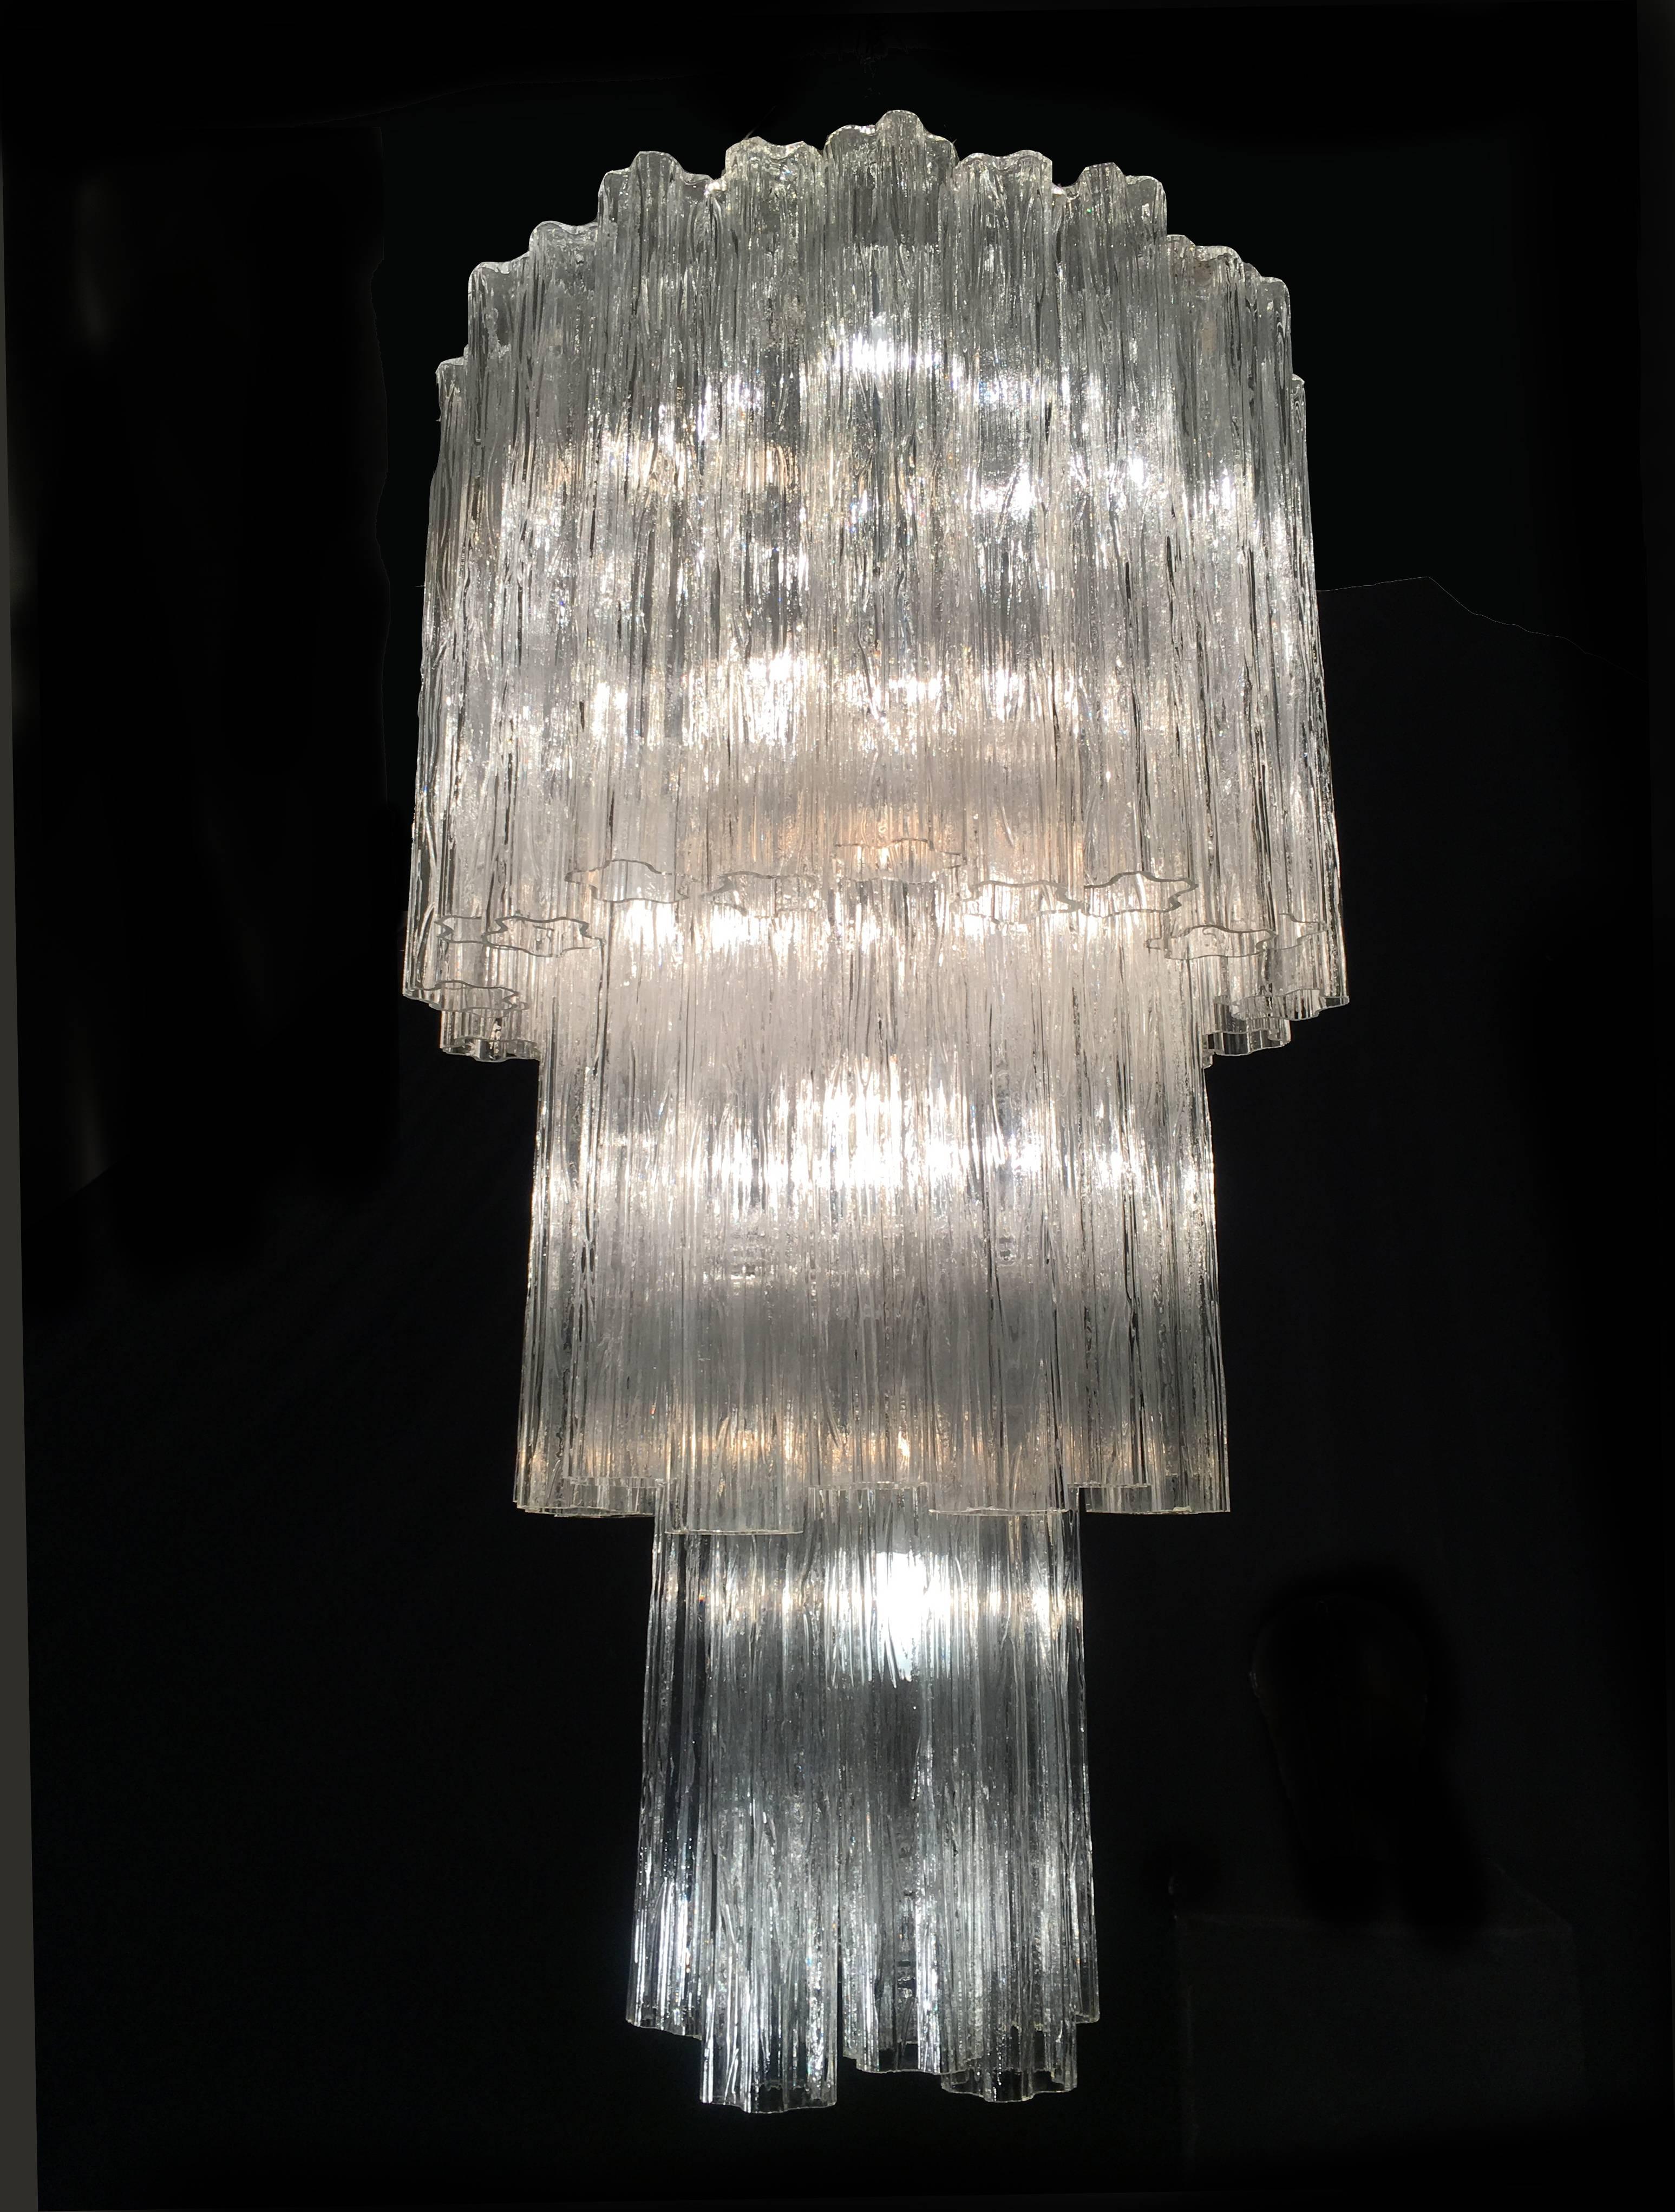 Each chandelier includes precious 48 tronchi Murano glass 50 cm long. 
Measures: Diameter 60 cm, height 115 cm. 16 lights.